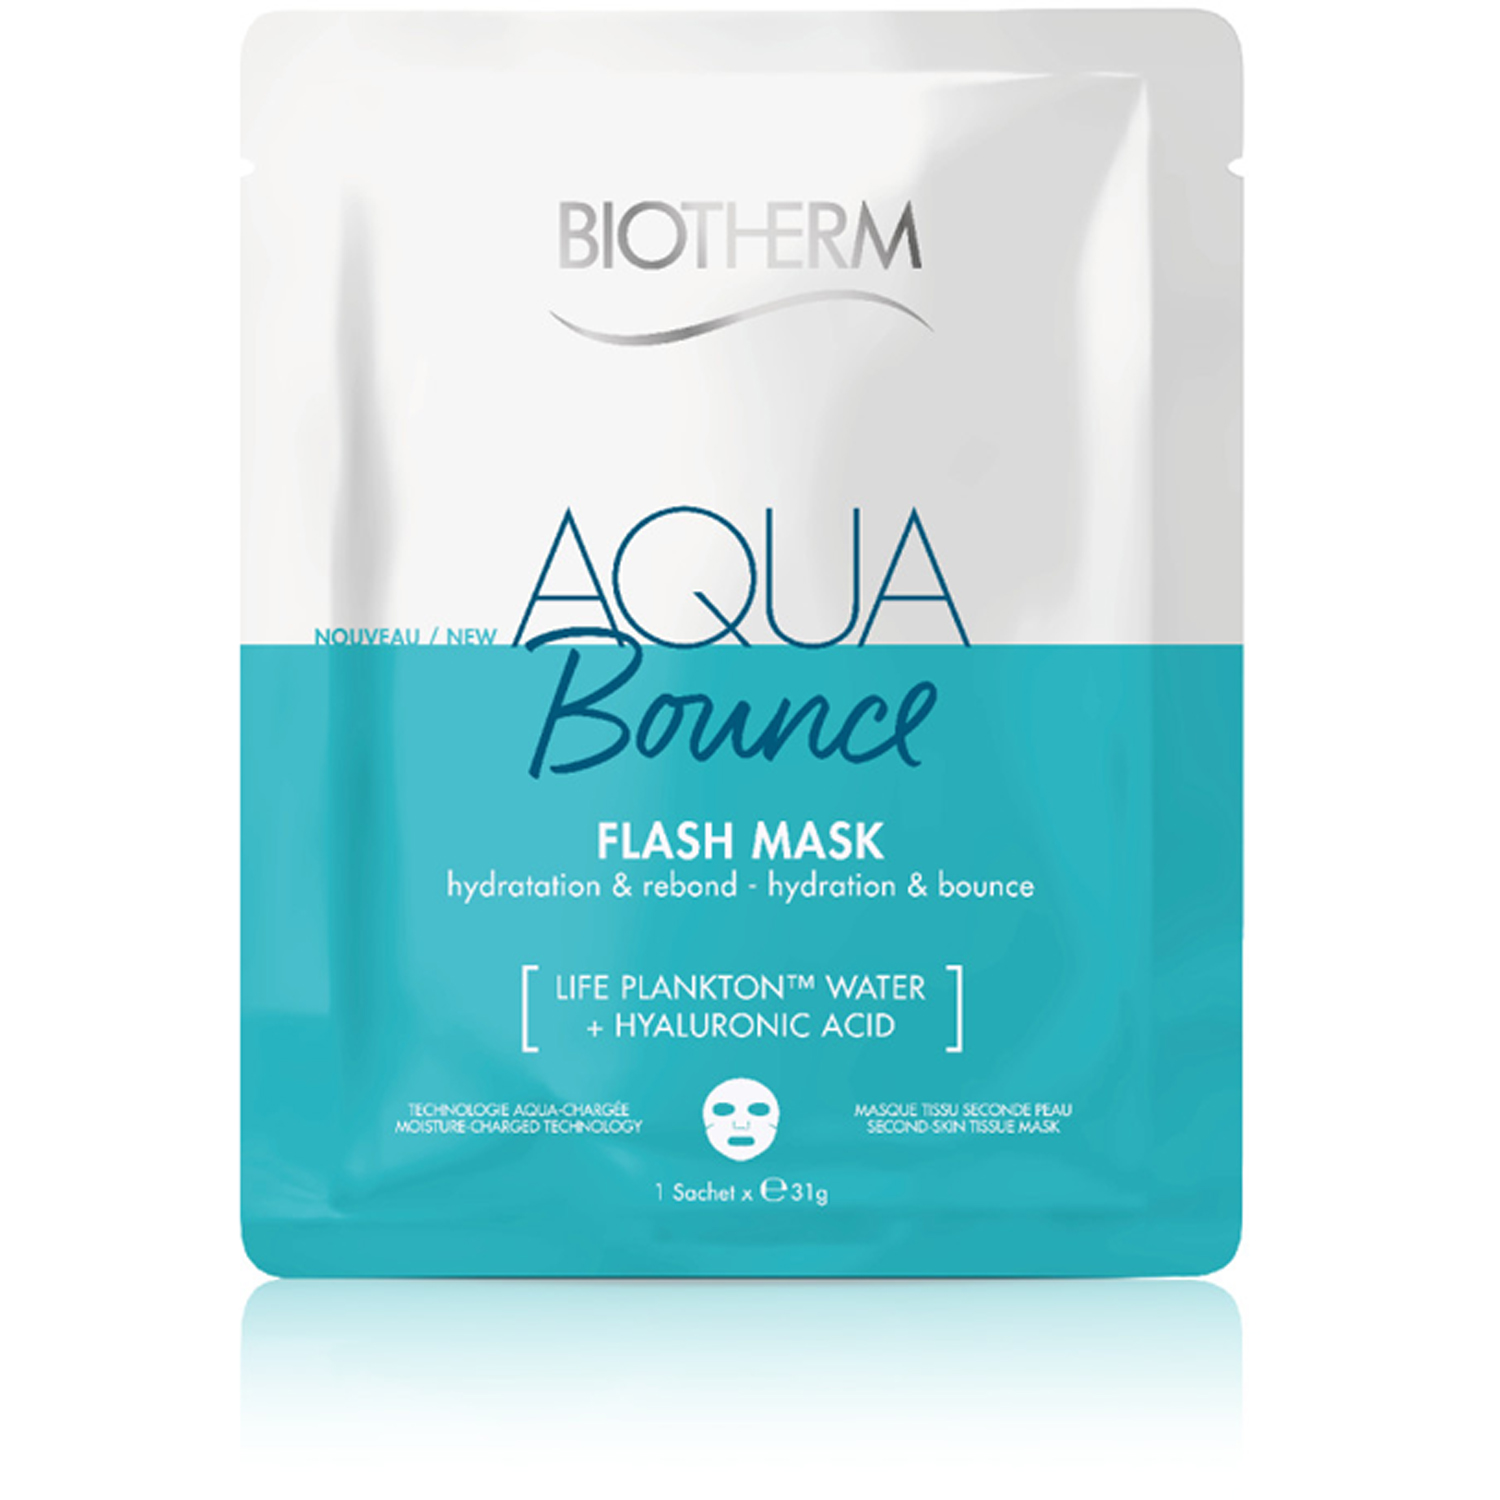 Aqua Super Mask, Biotherm Ansiktsmask